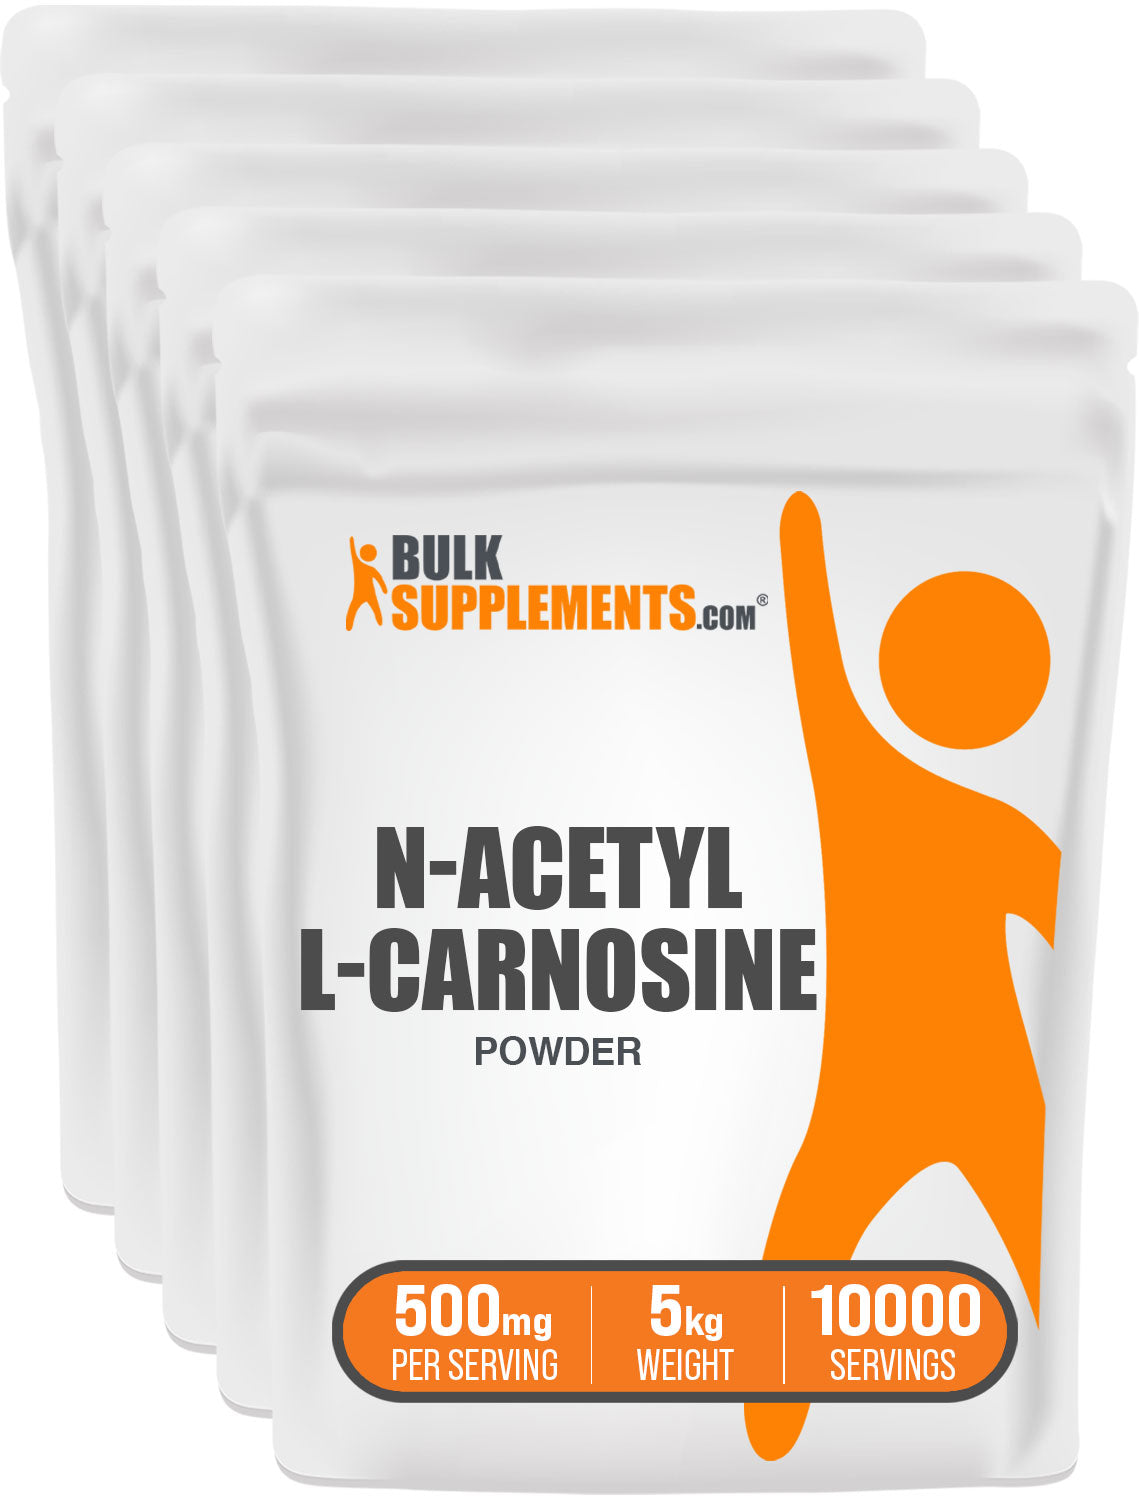 BulkSupplements N-Acetyl L-Carnosine Powder 5kg bags